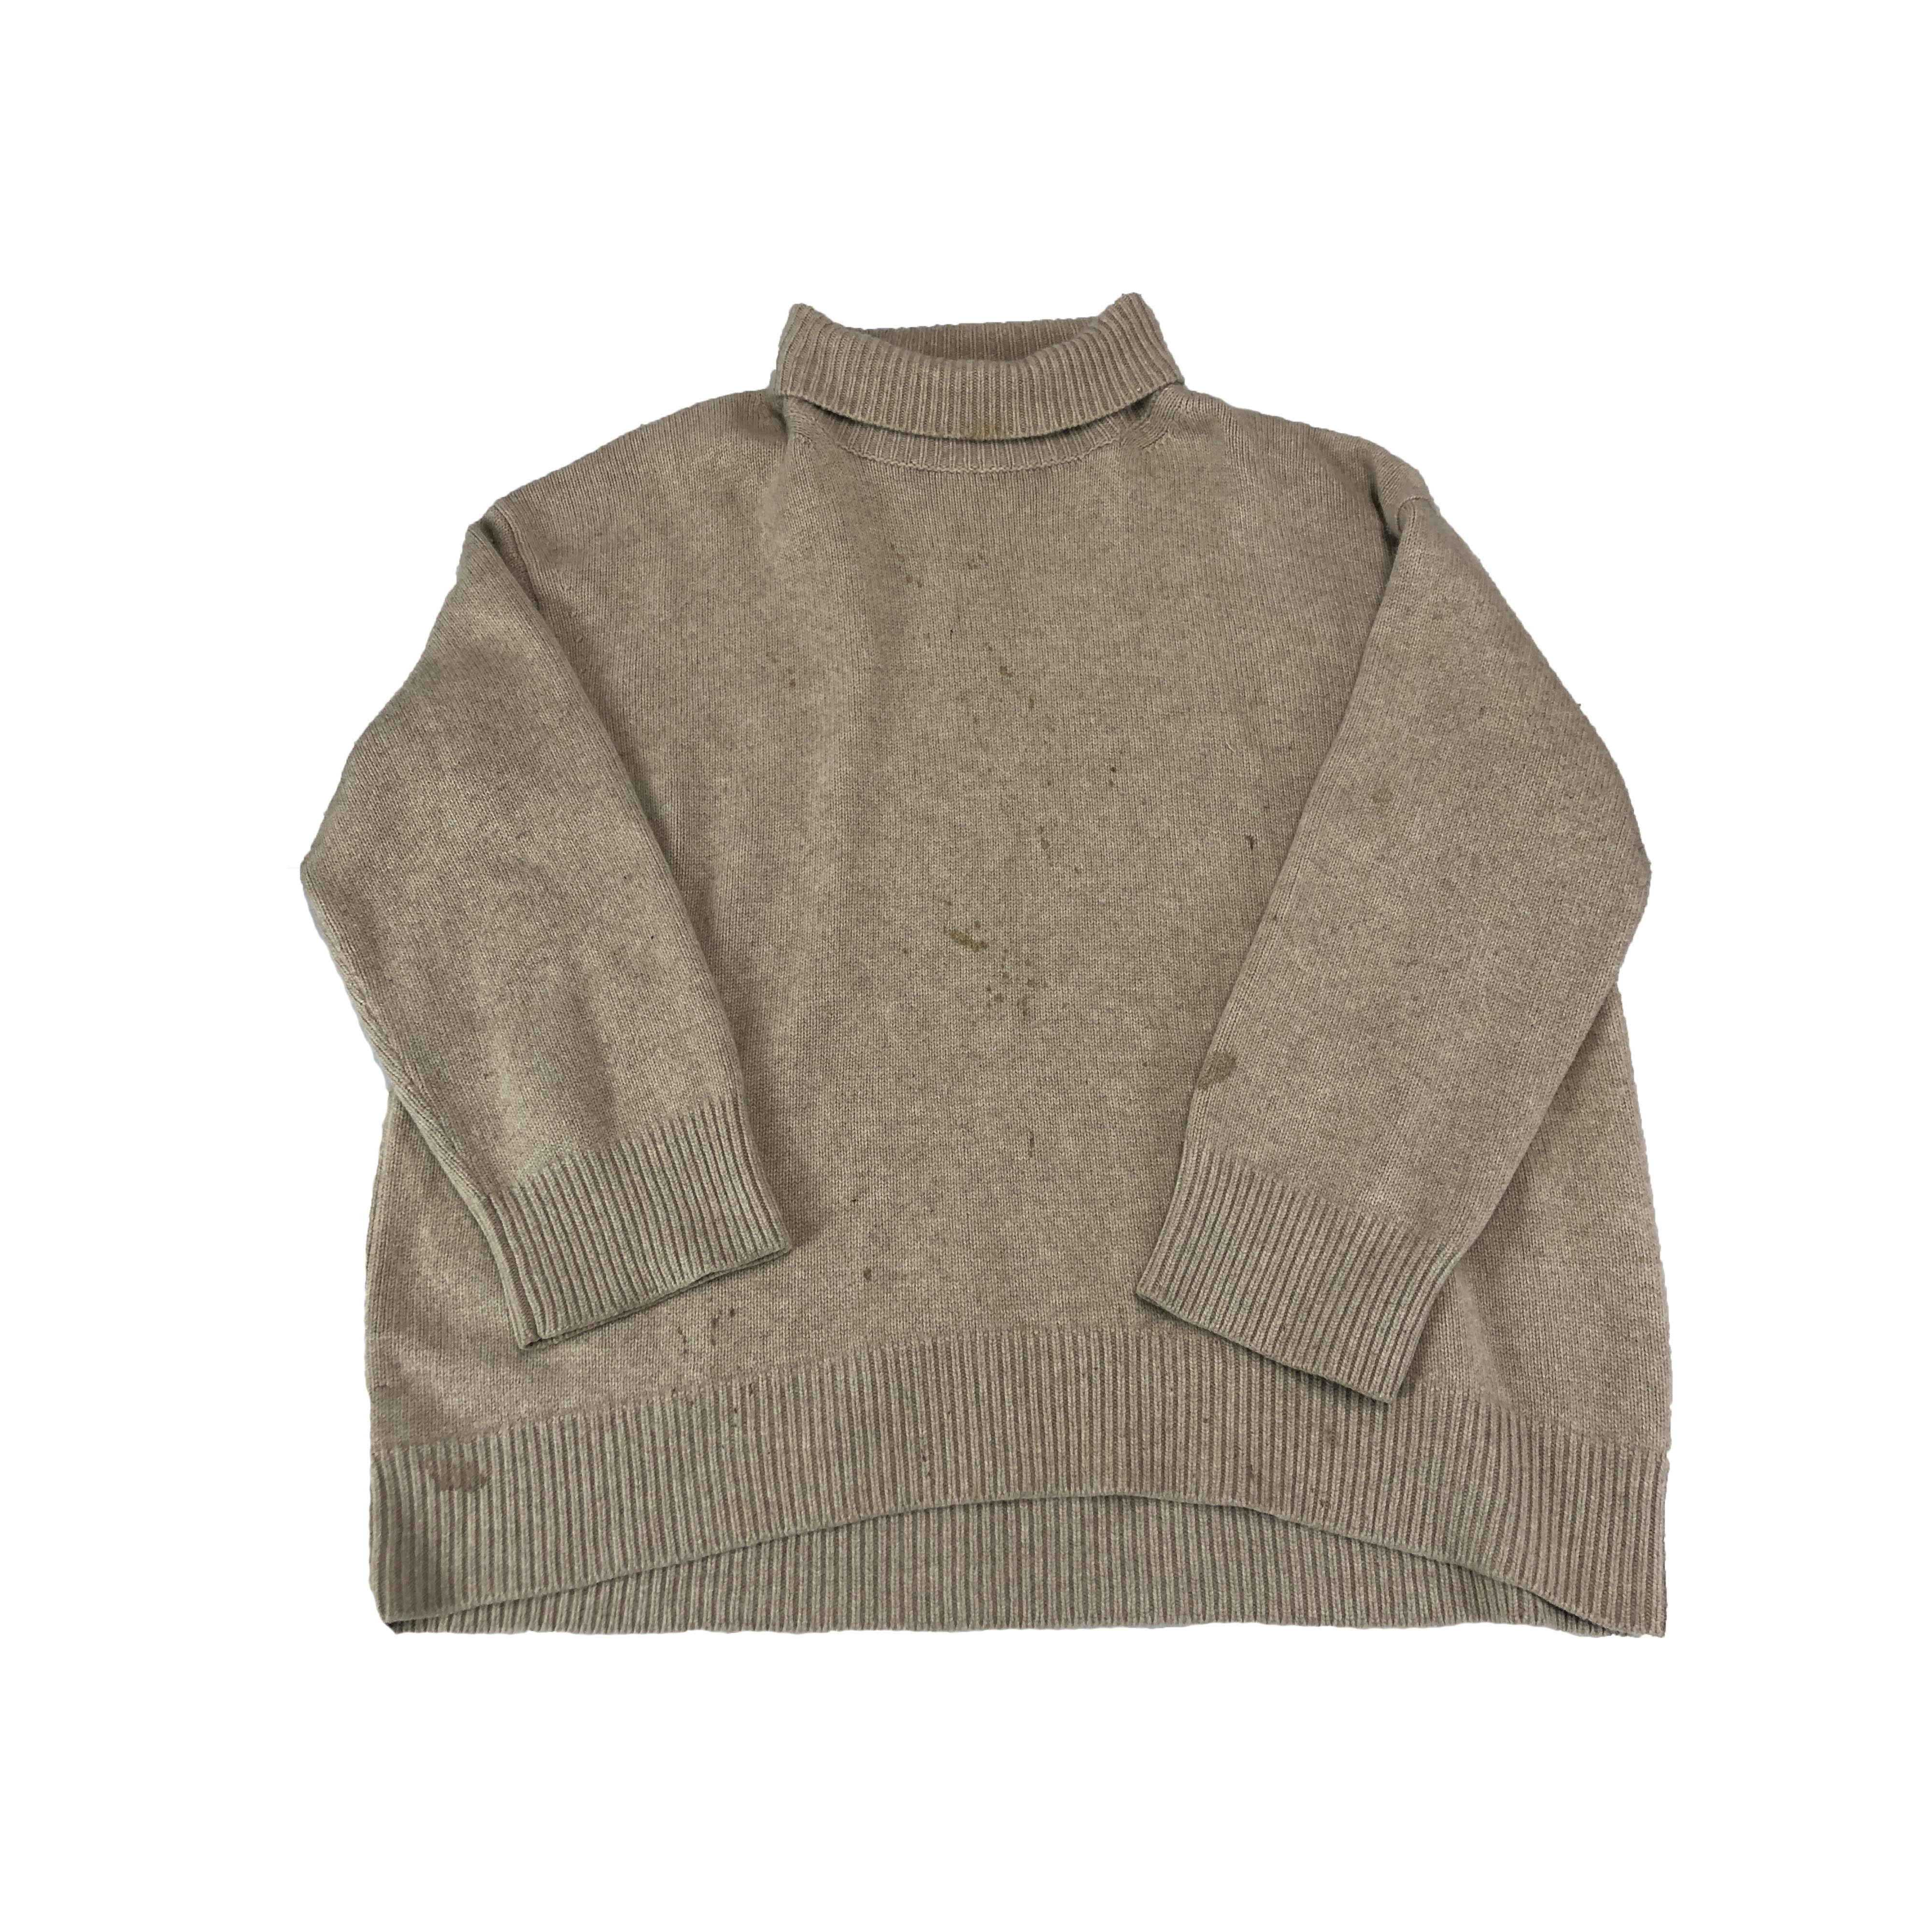 [Celine] Cashmere Sweater Ivory - Size M